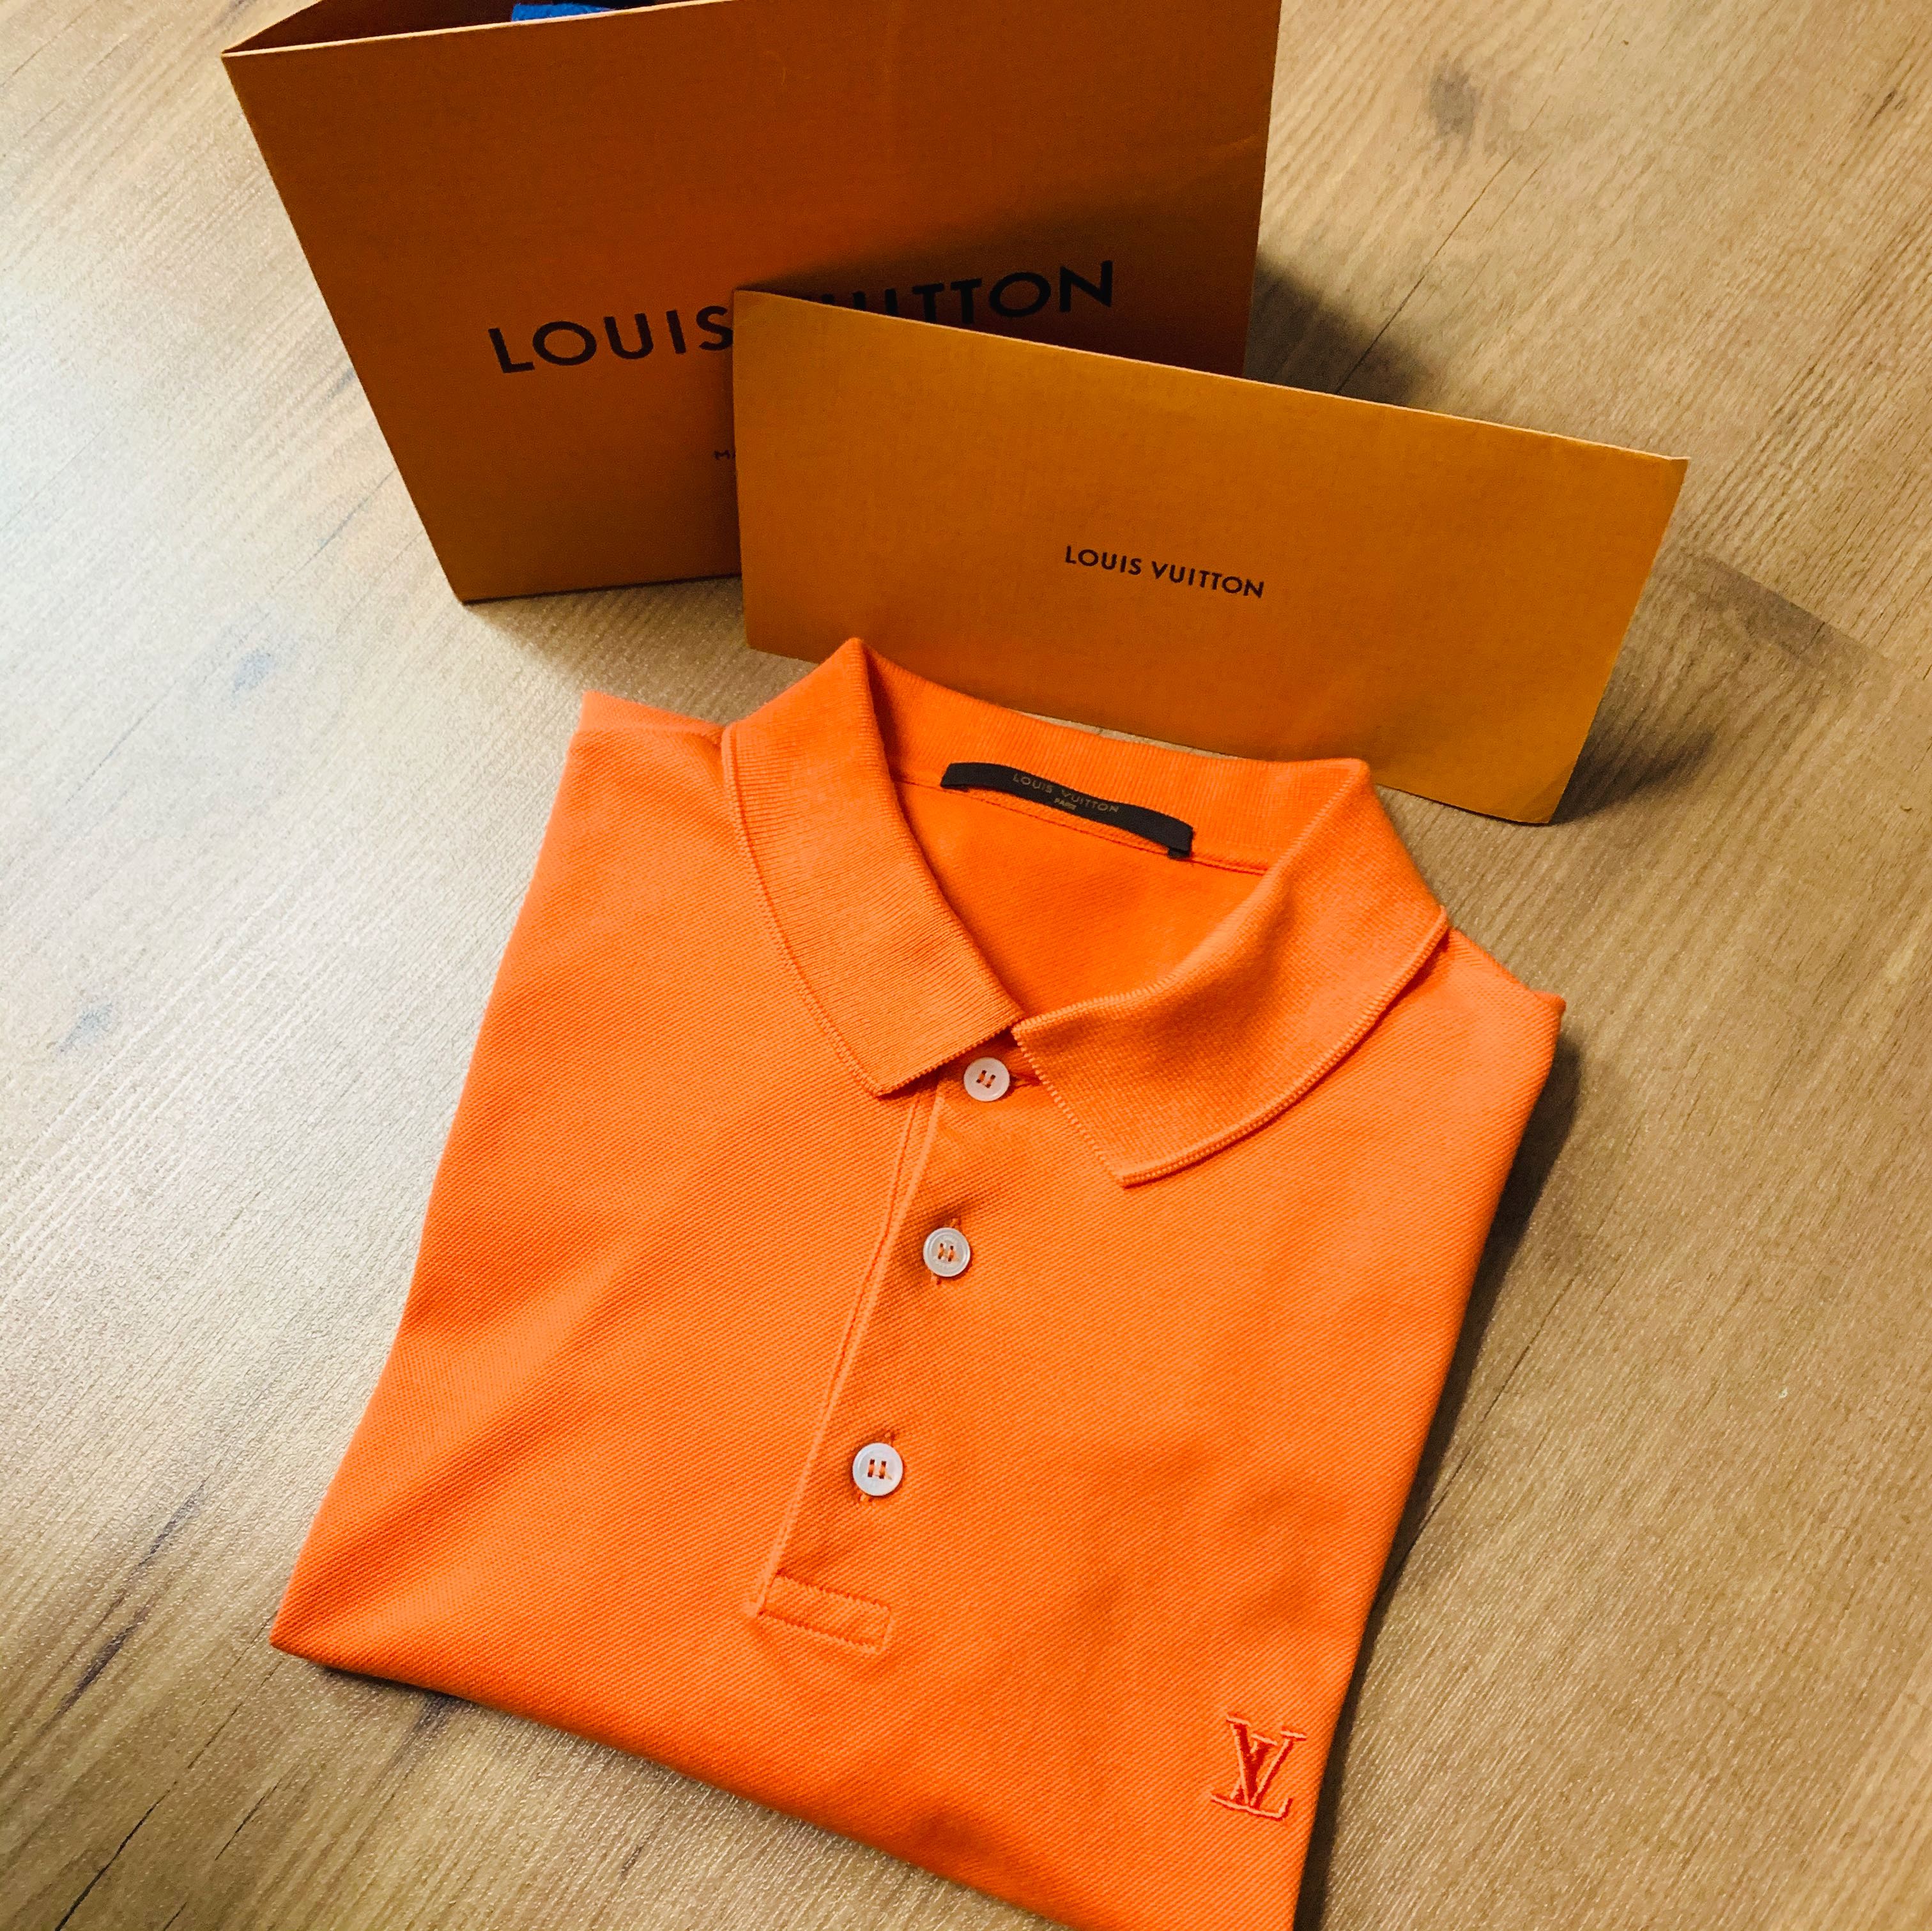 Authentic LOUIS VUITTON Polo Shirts #241-003-276-4425